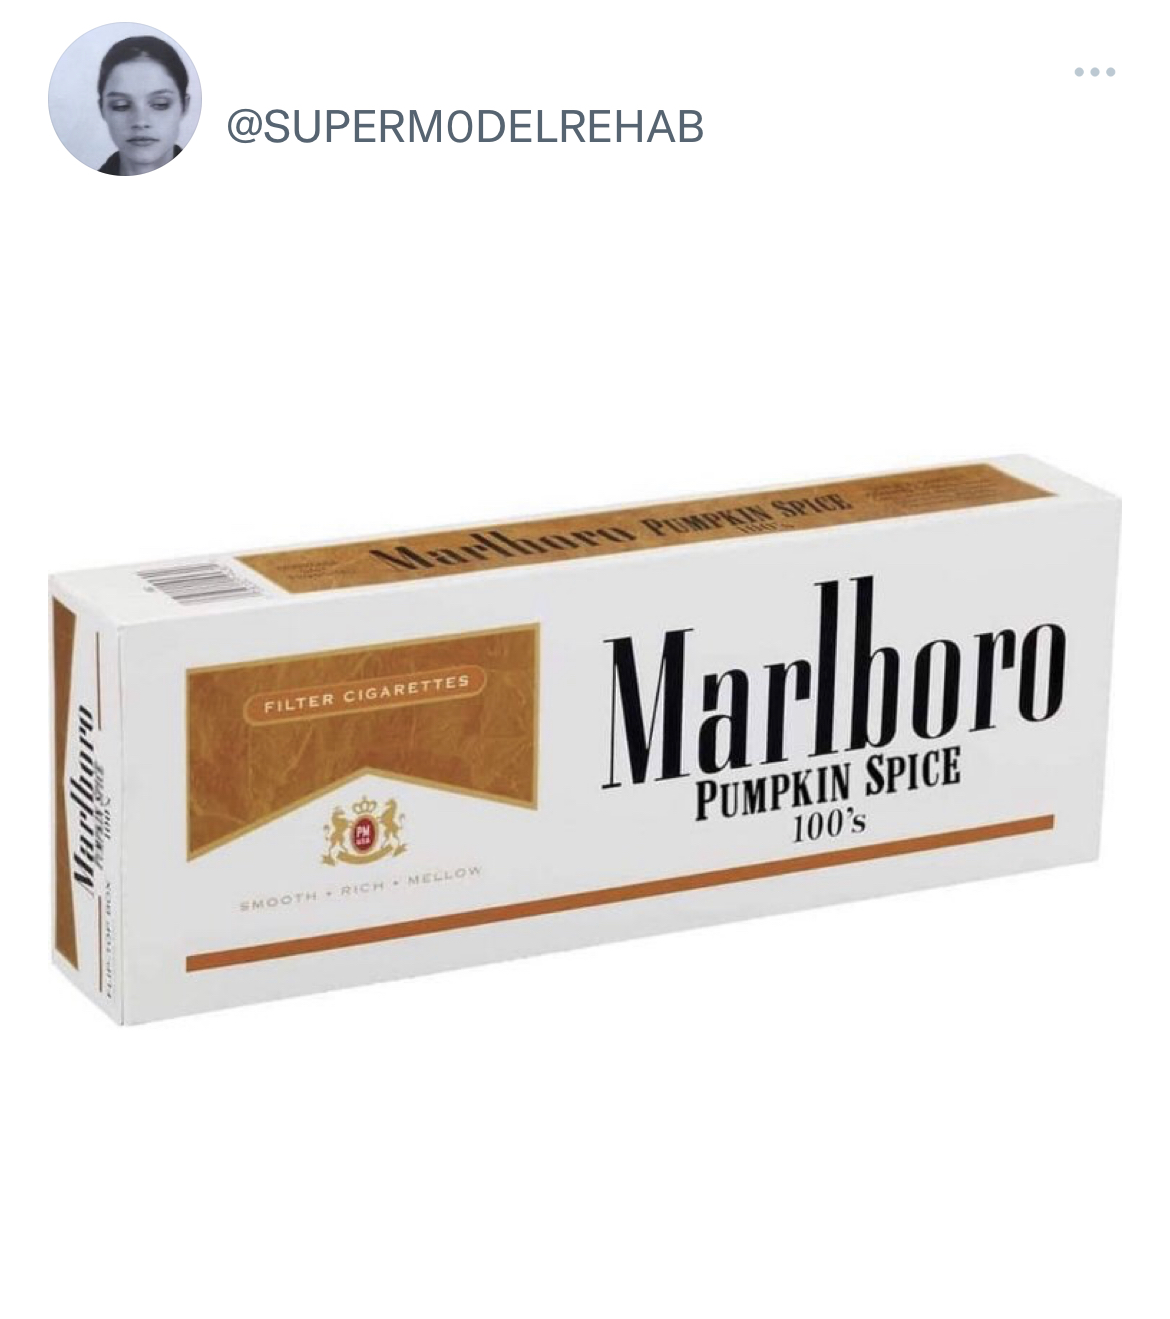 Savage and hilarious tweets - marlboro 27 carton - Marlboro Filter Cigarettes Smooth Rich Mellow Marlboro Pumpkin Spice 100's